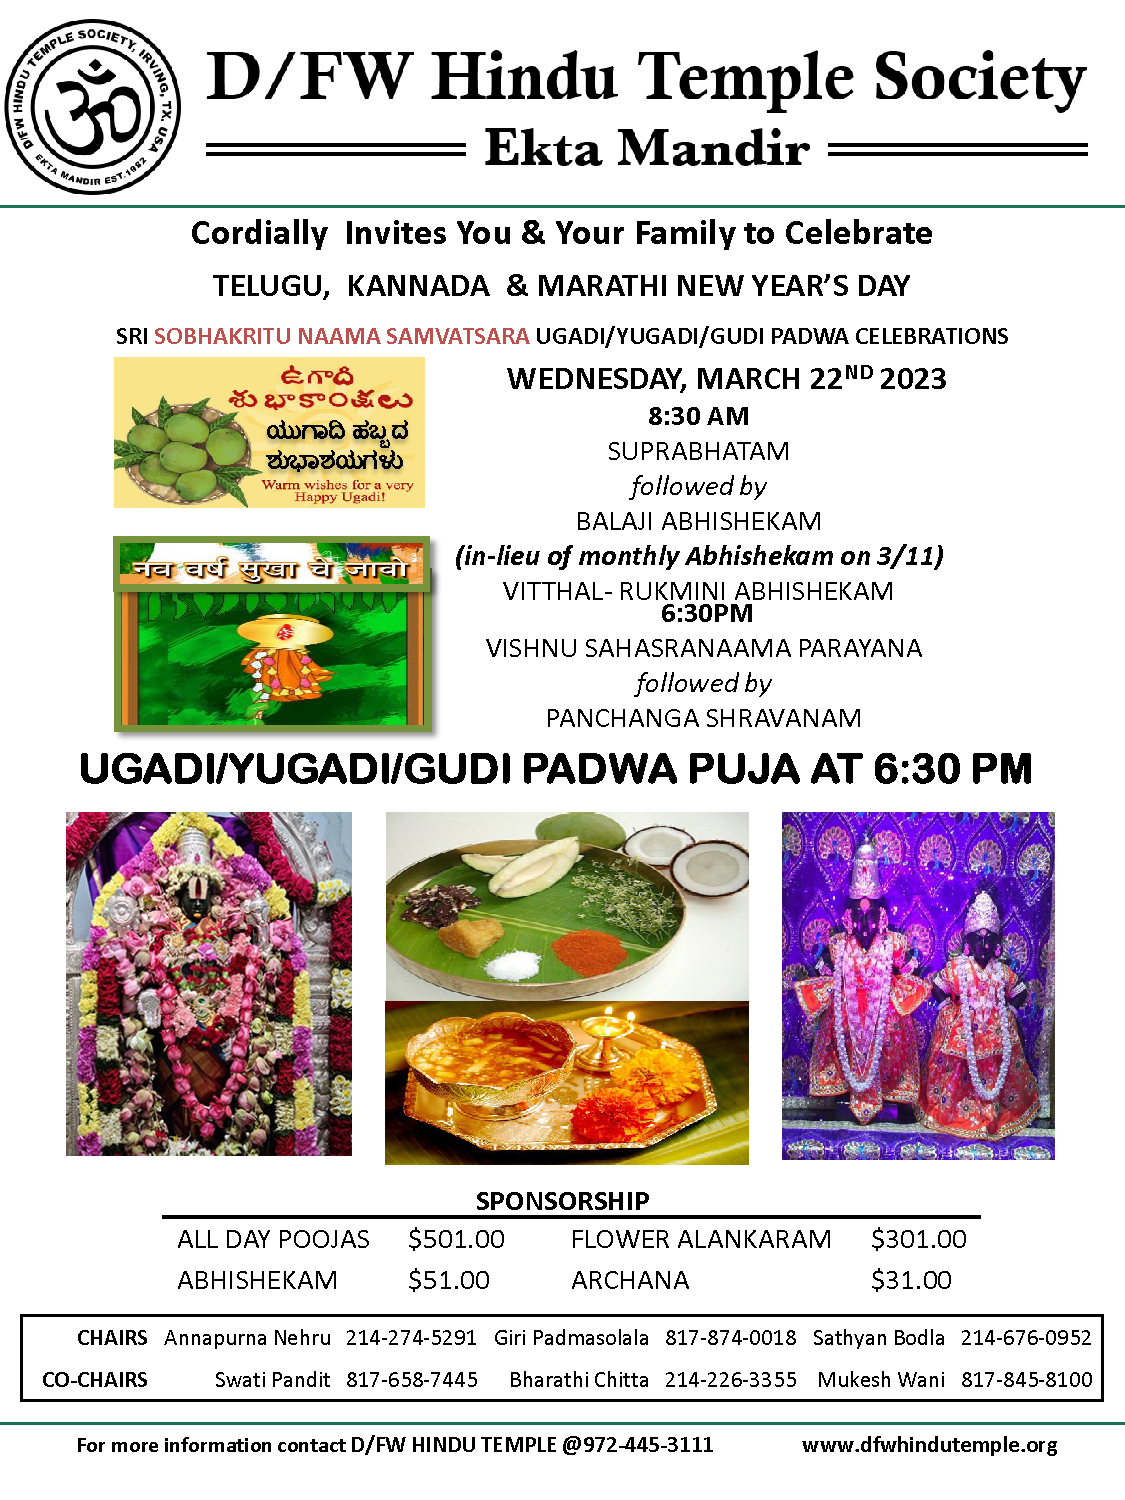 Sri Sobhakritu Naama Samvatsaraugadi/Yugadi/Gudi Padwa Celebrations